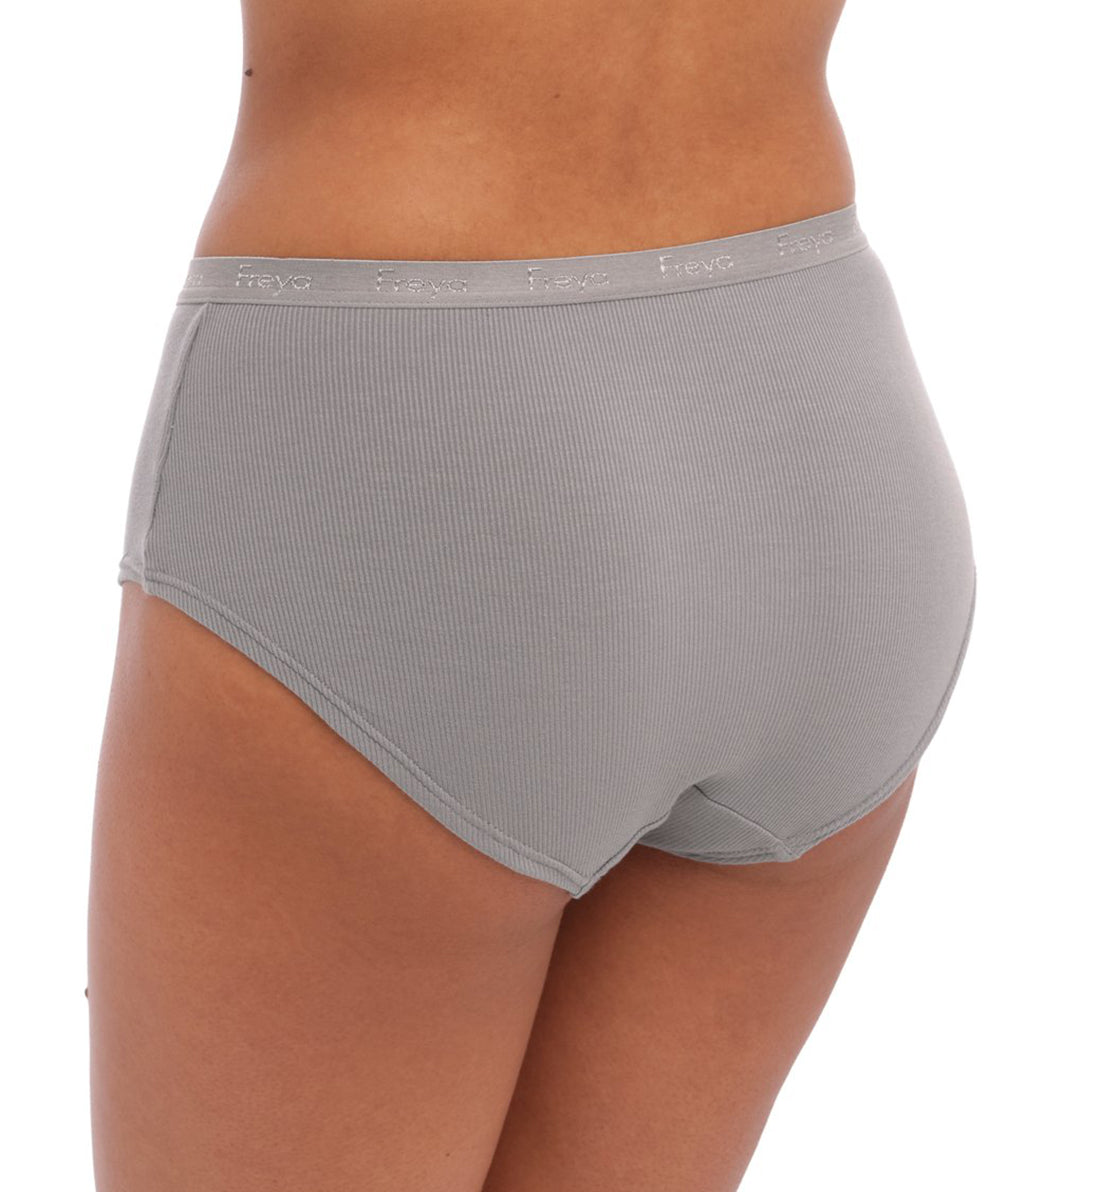 Freya Chill Short Panty (401380),XS,Cool Grey - Cool Grey,XS